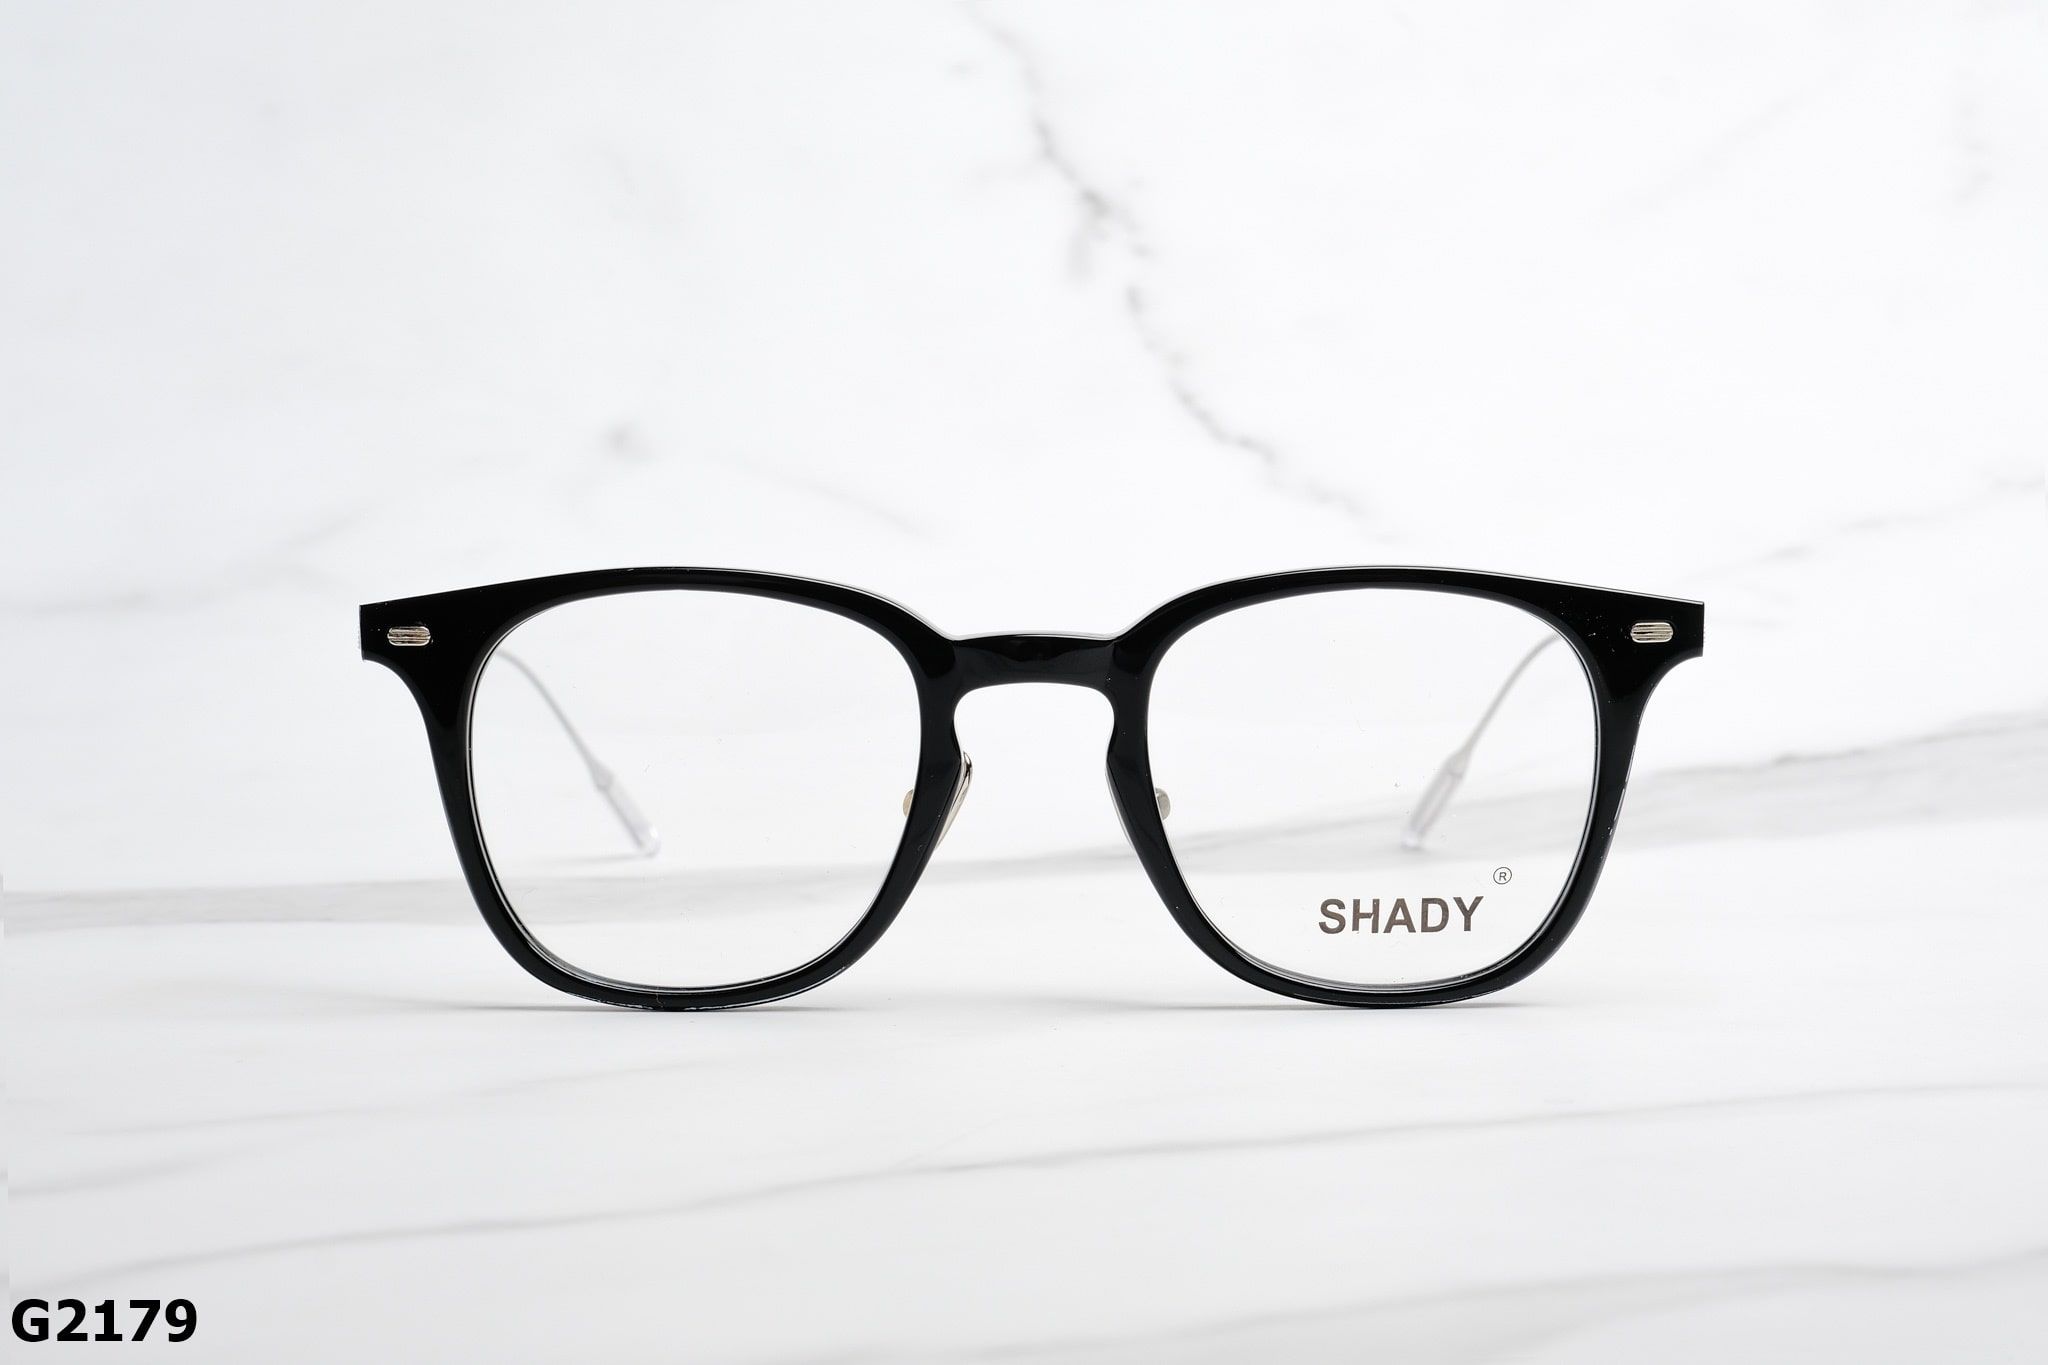  SHADY Eyewear - Glasses - G2179 